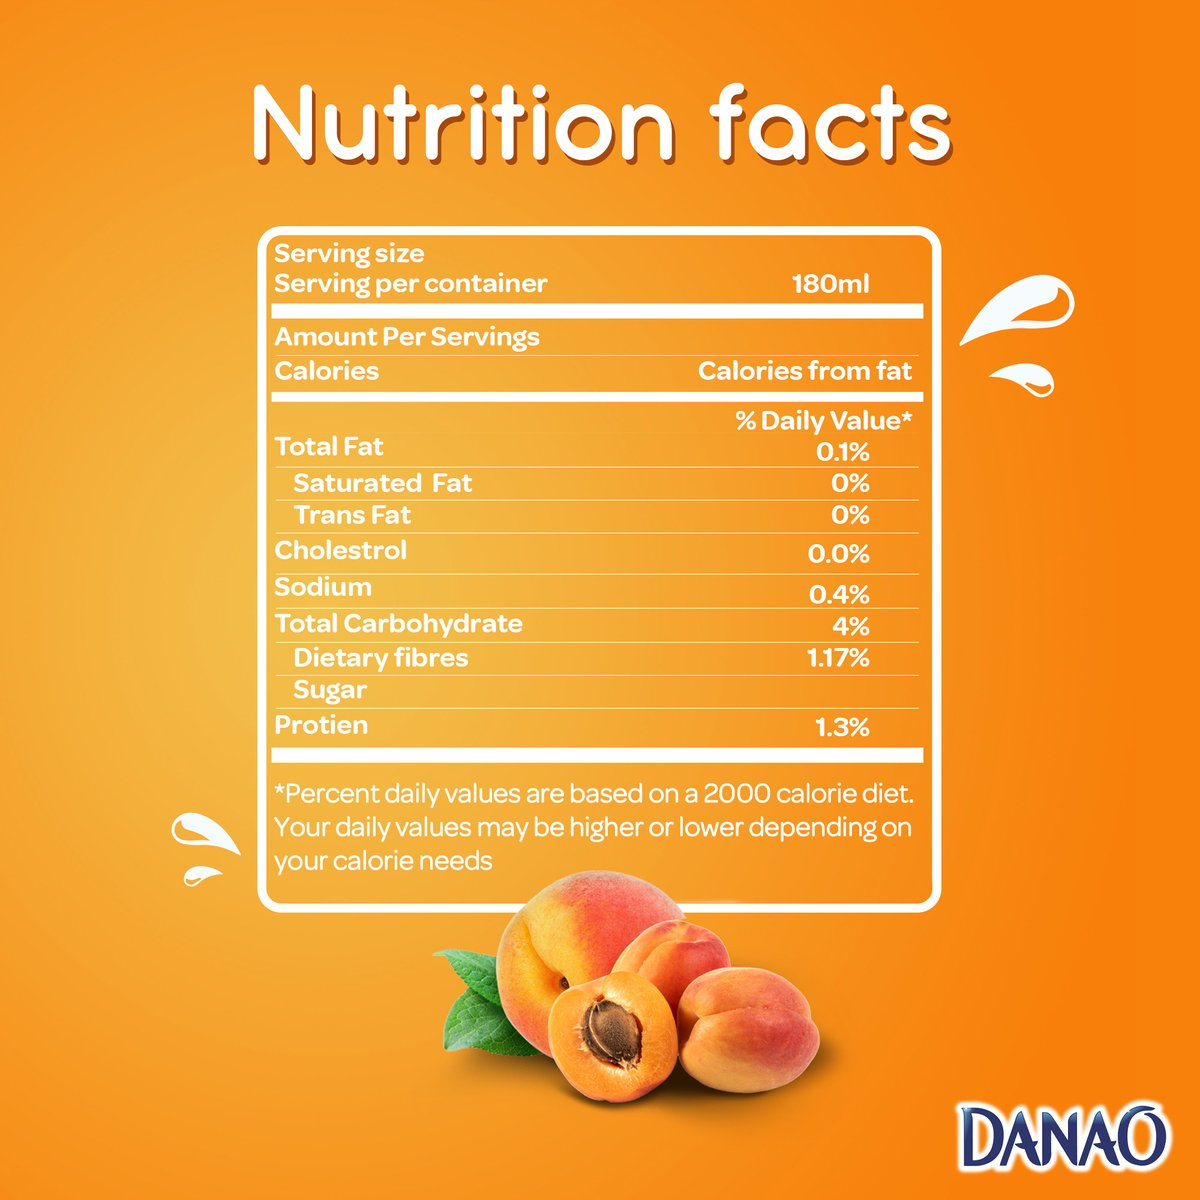 Danao No Added Sugar Peach & Apricot Juice Drink with Milk 180 ml